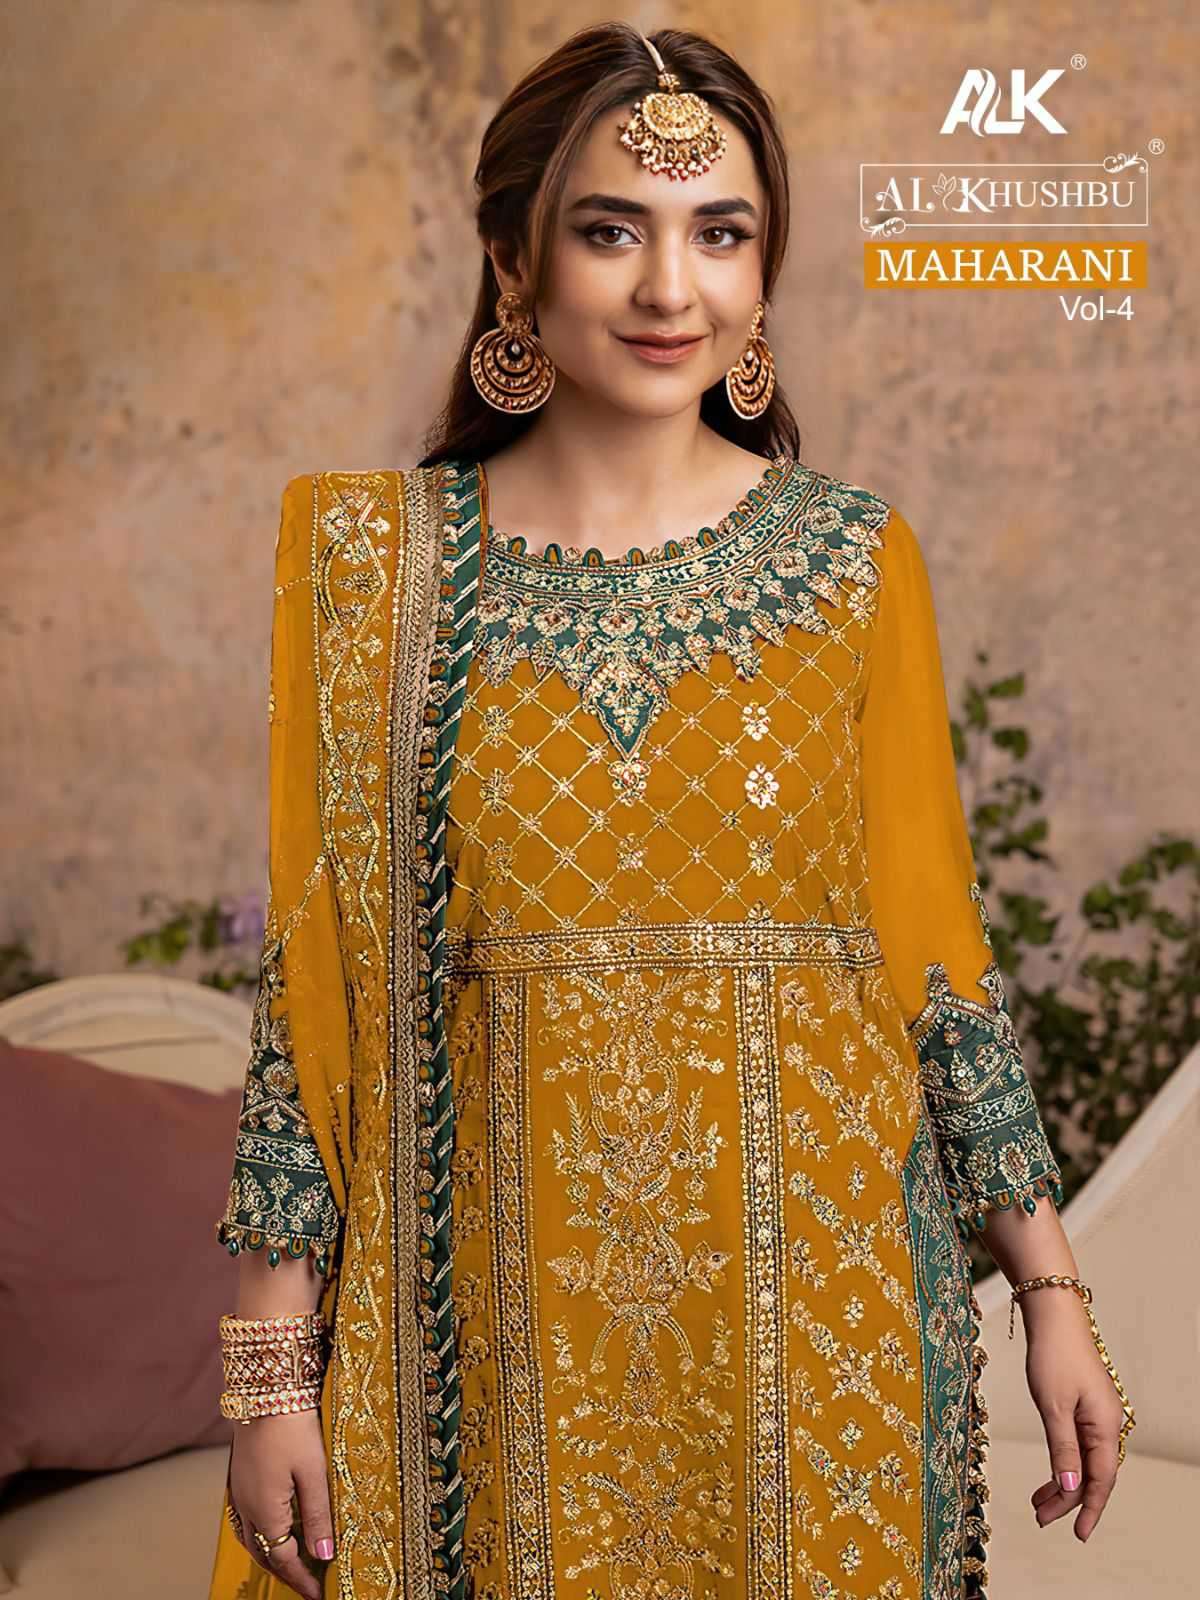 Al Khushbu Maharani Vol 4 5082 Colors Wedding Dress Latest Pakistani Designs